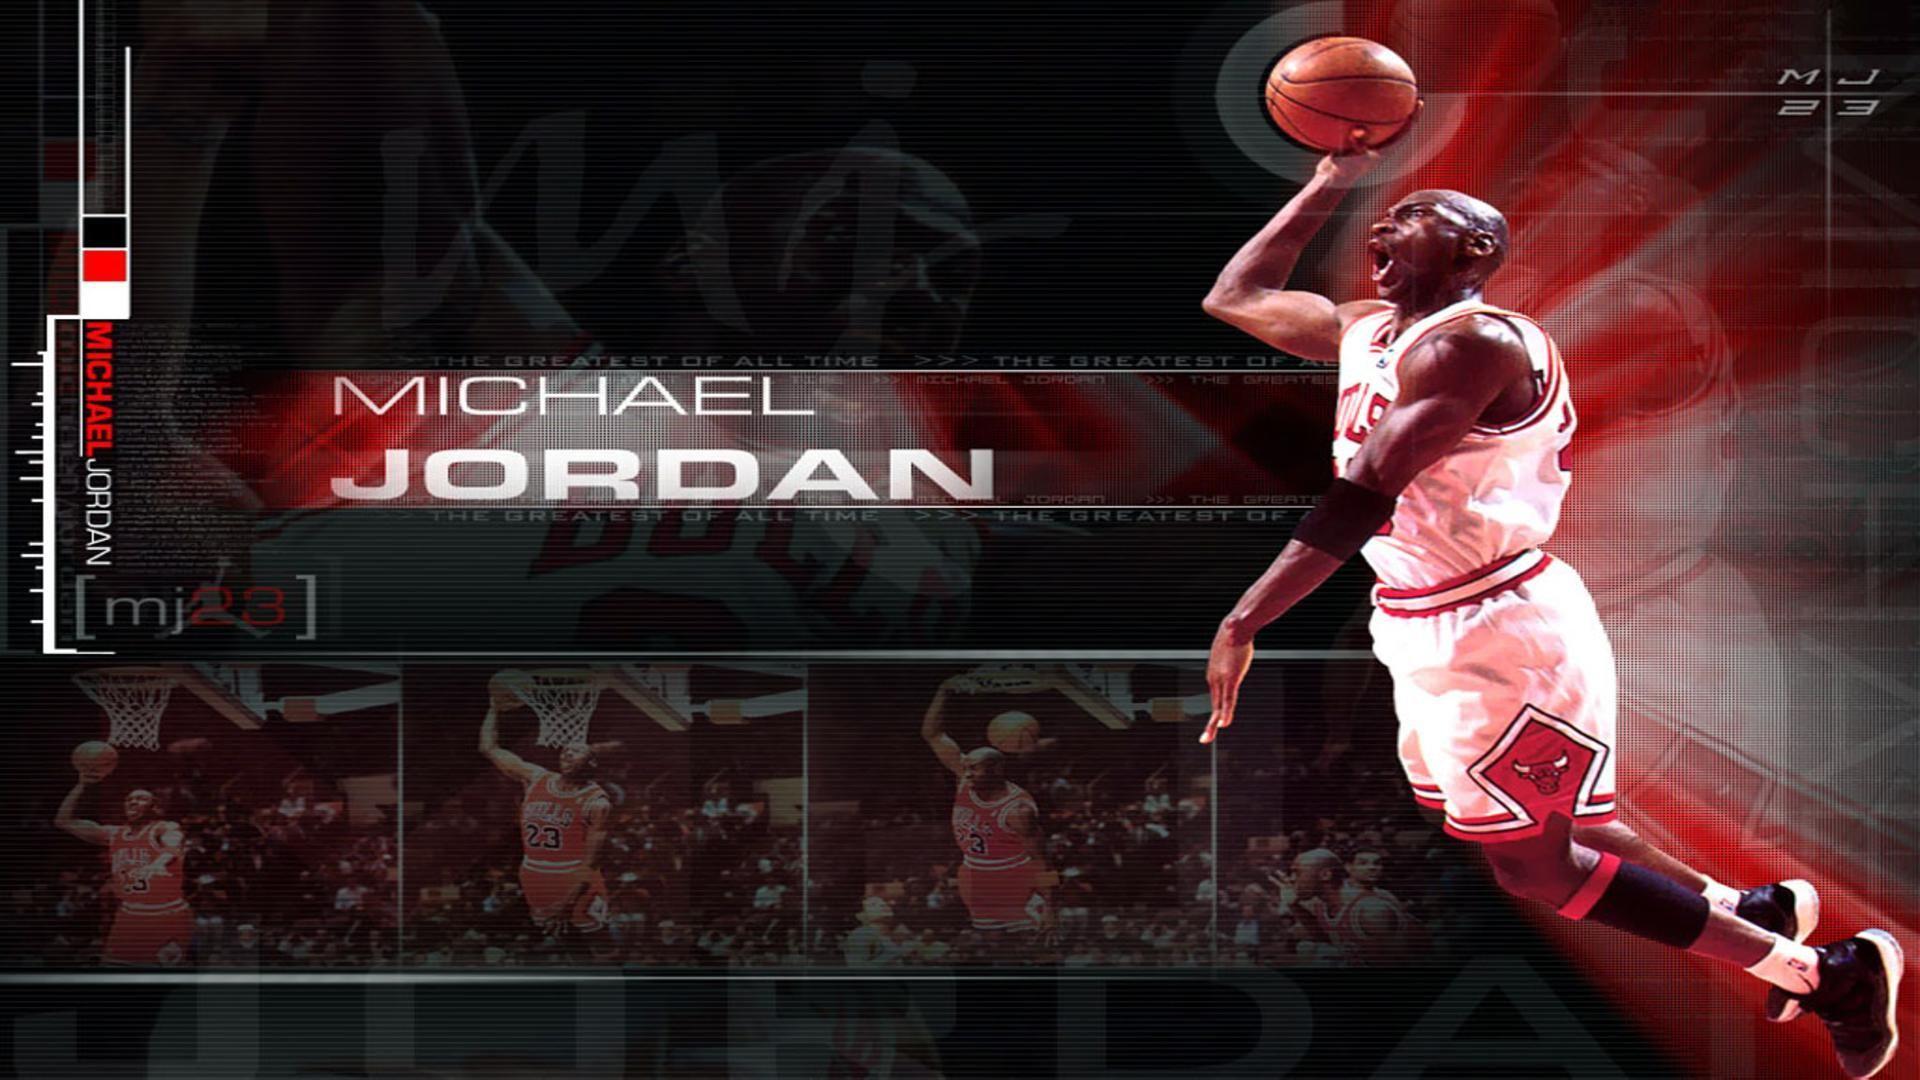 Jordan Desktop Backgrounds